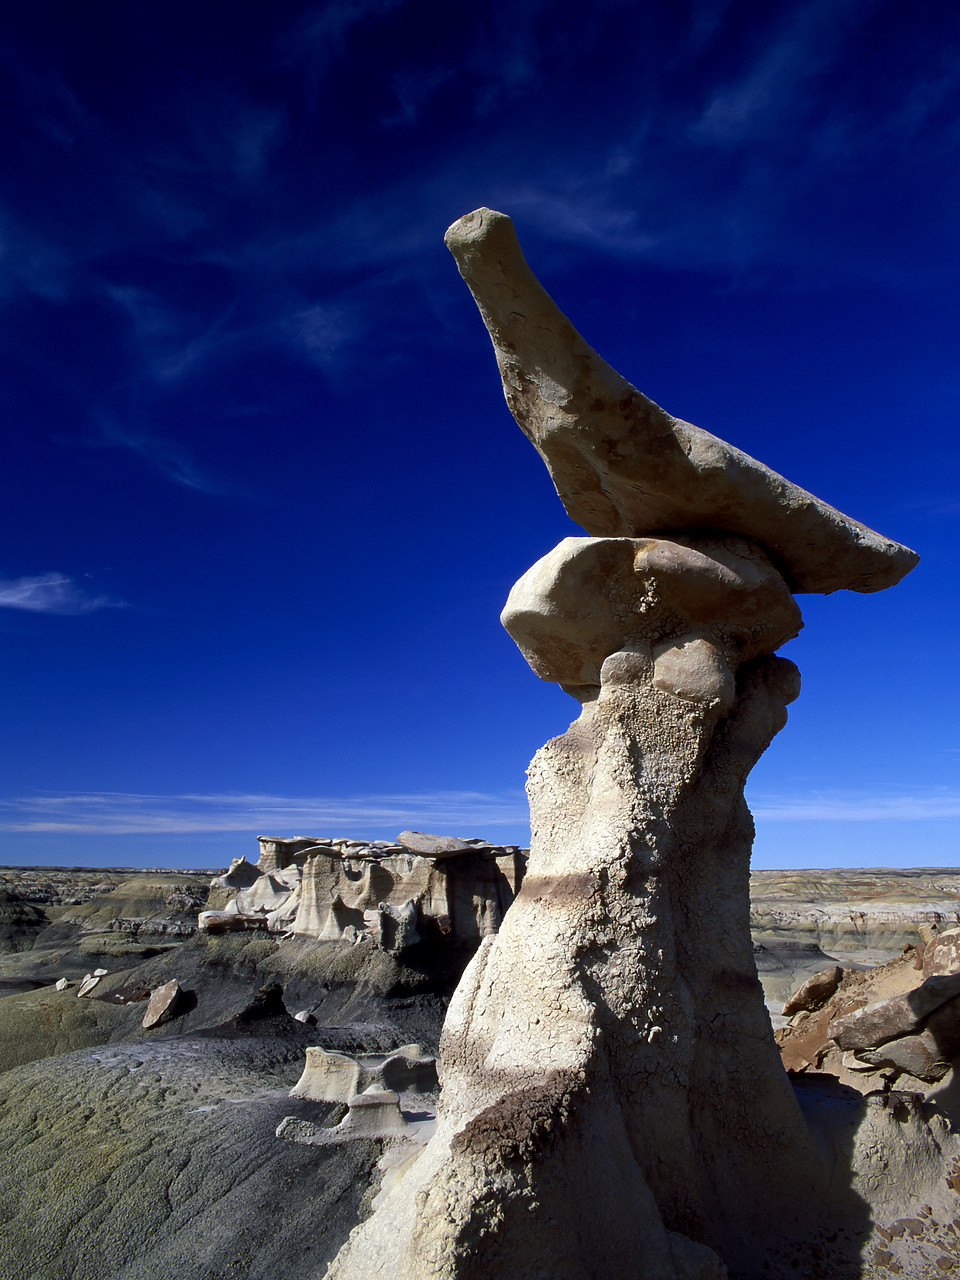 #010752-2 - Balanced Rock, Bisti wilderness Area, New Mexico, USA